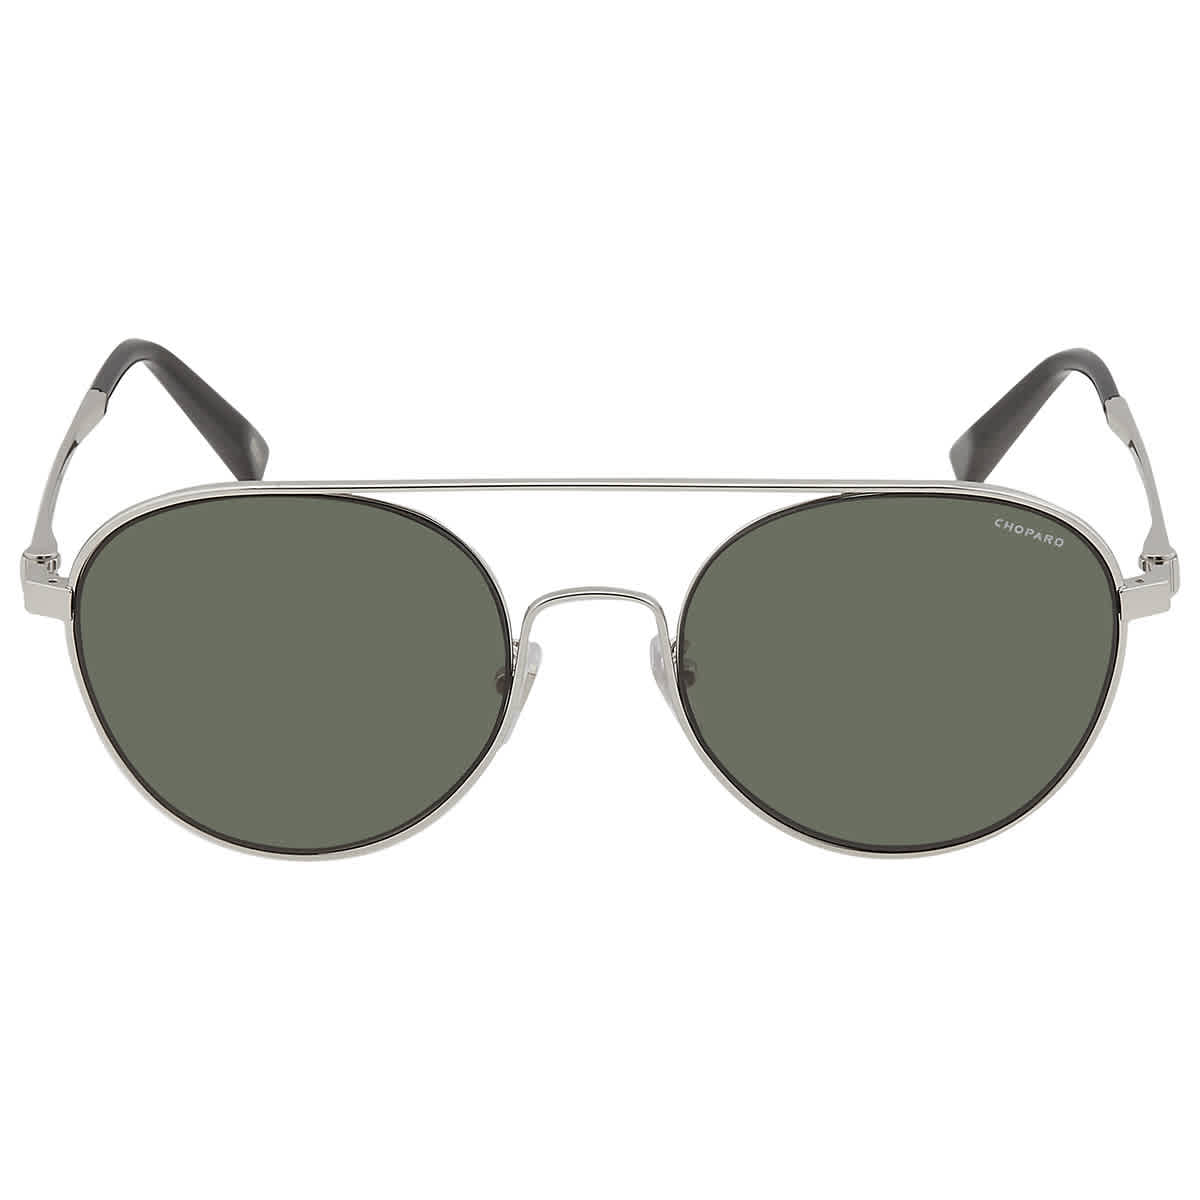 Chopard Green Polarized Round Men's Sunglasses SCHC29 579P 55 - image 1 of 2